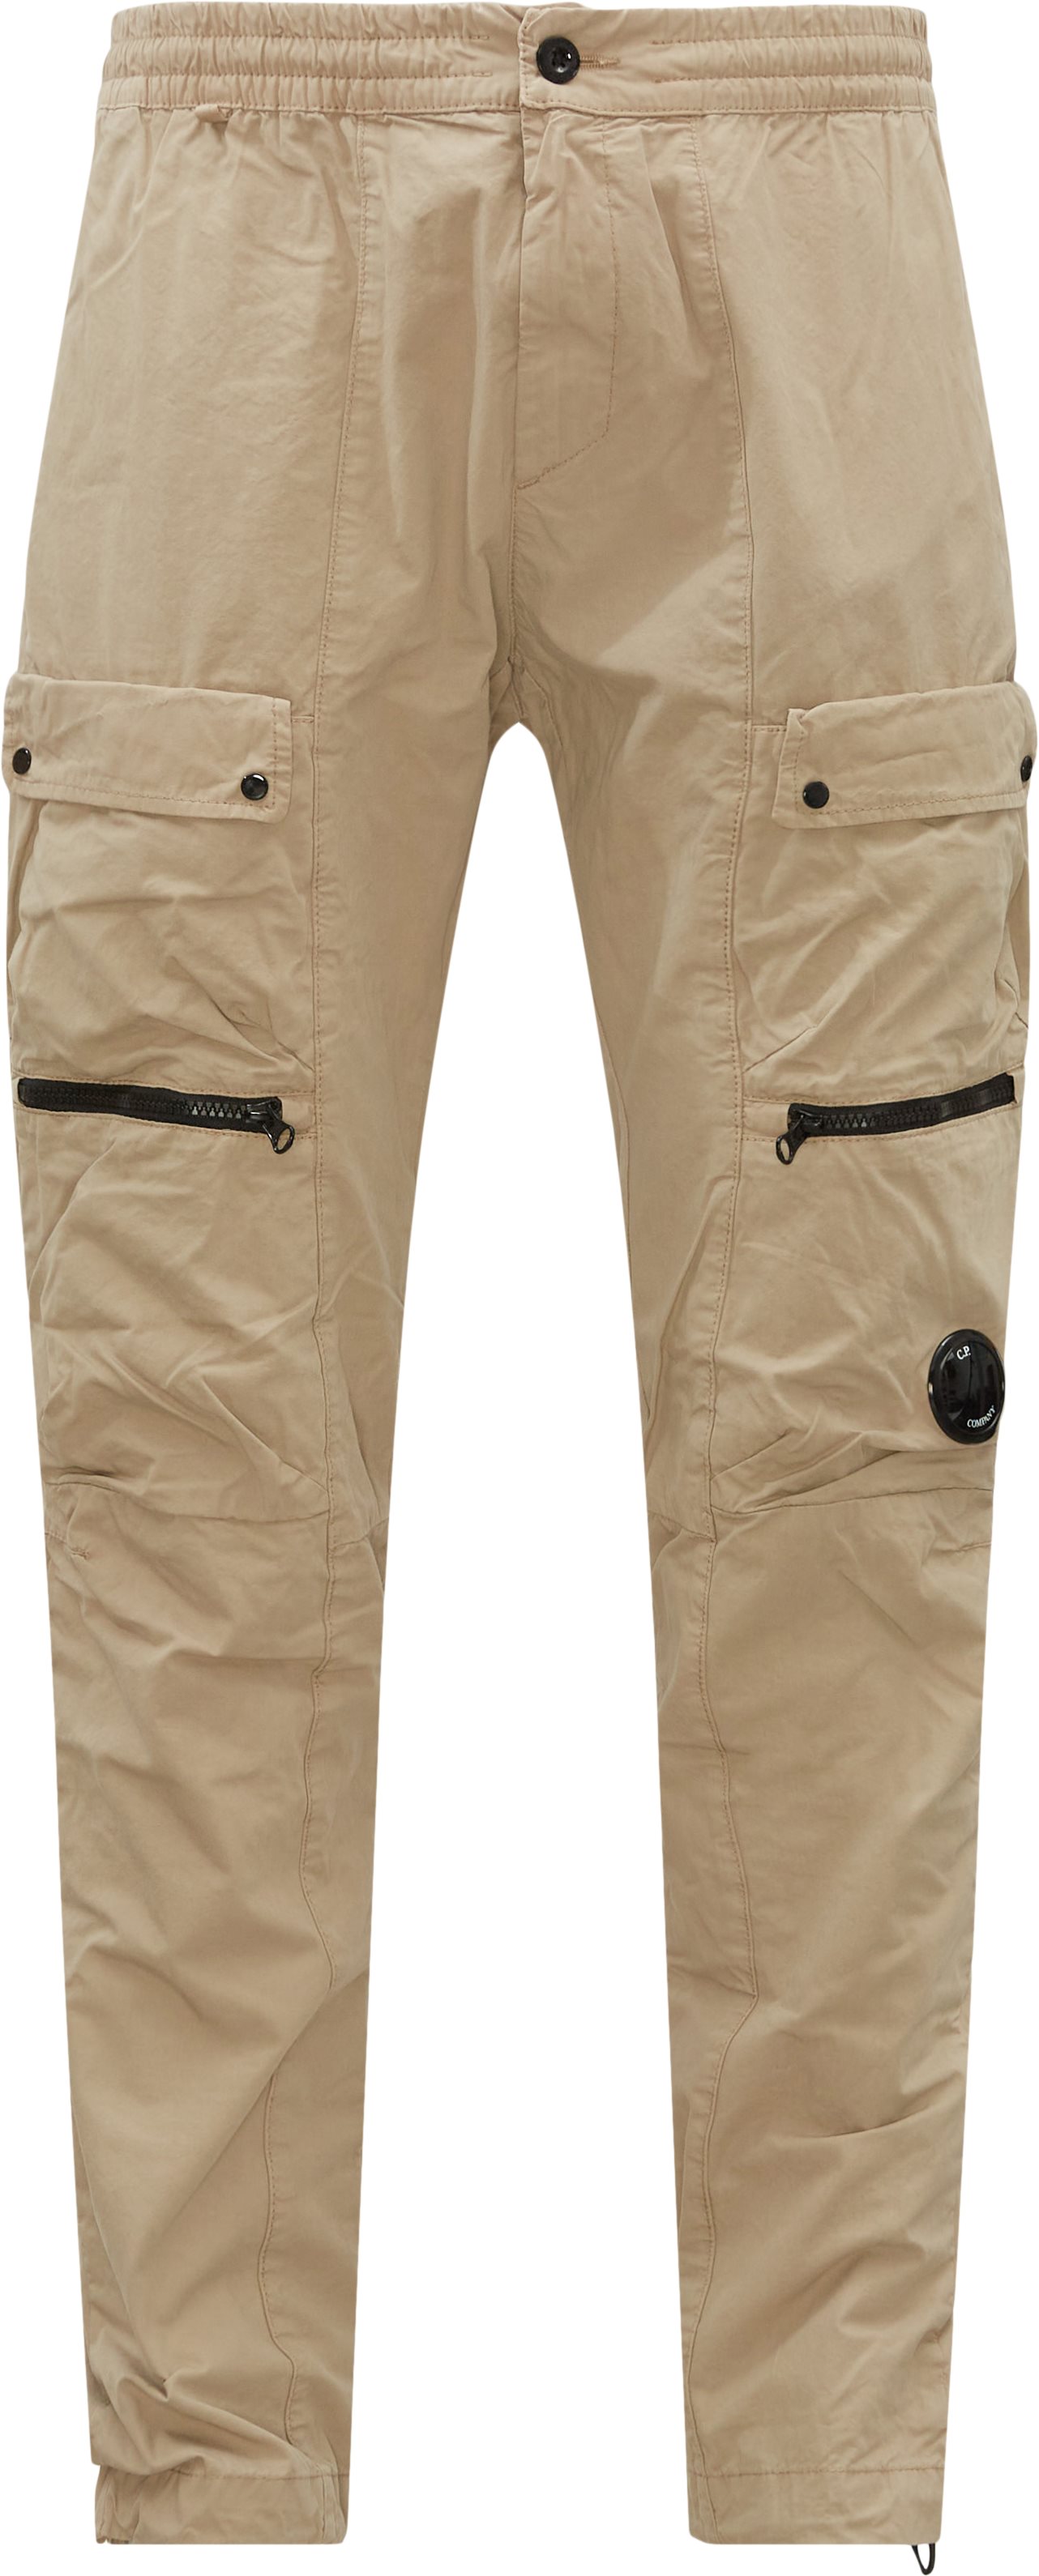 C.P. Company Trousers PA160A 6475G Sand